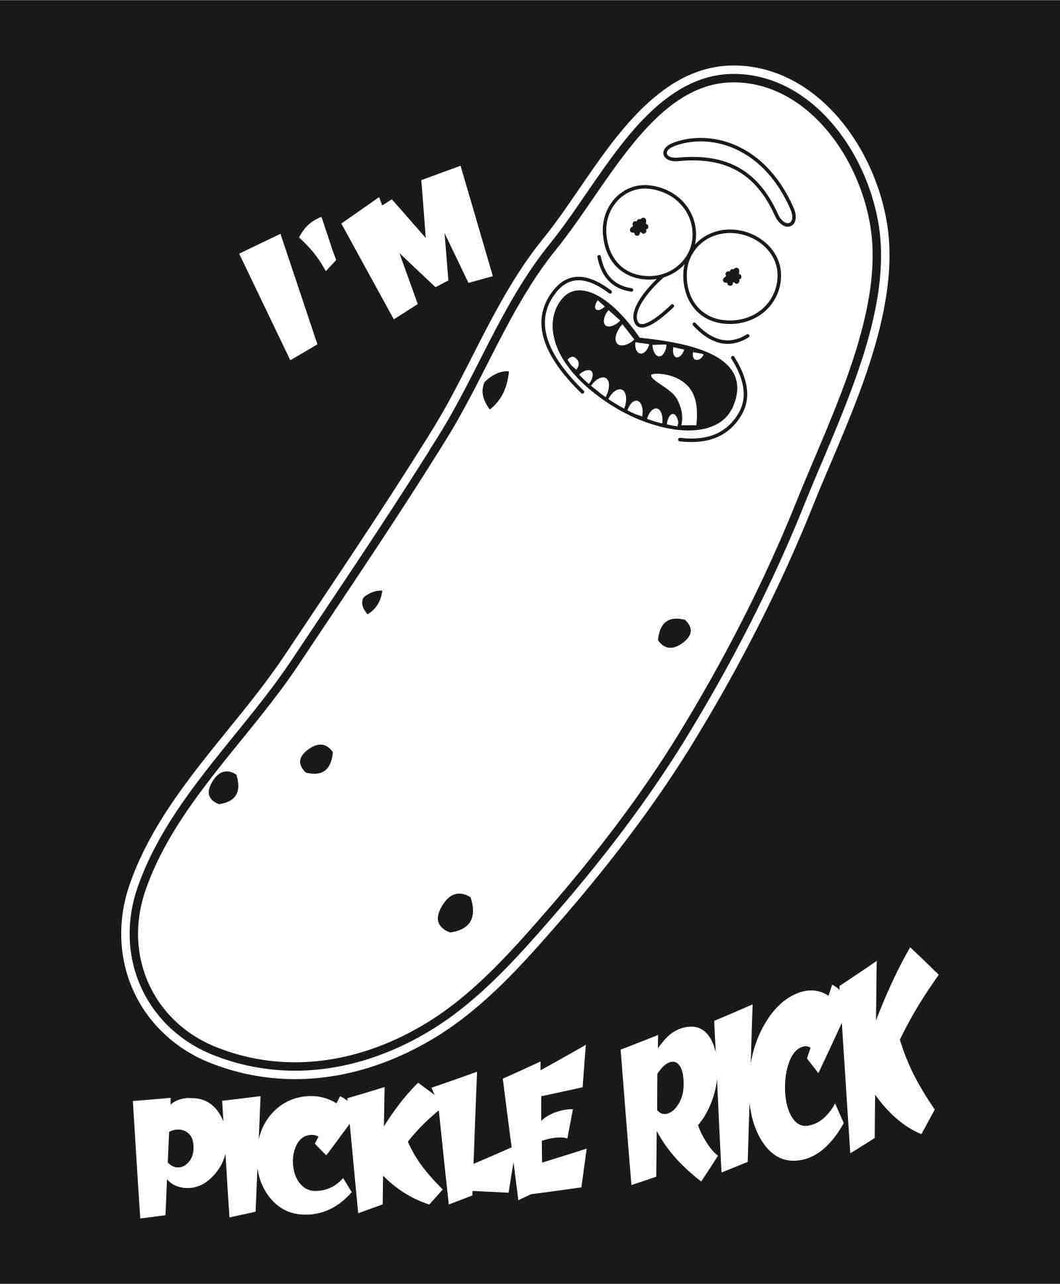 Pickle Rick Vinyl Decal